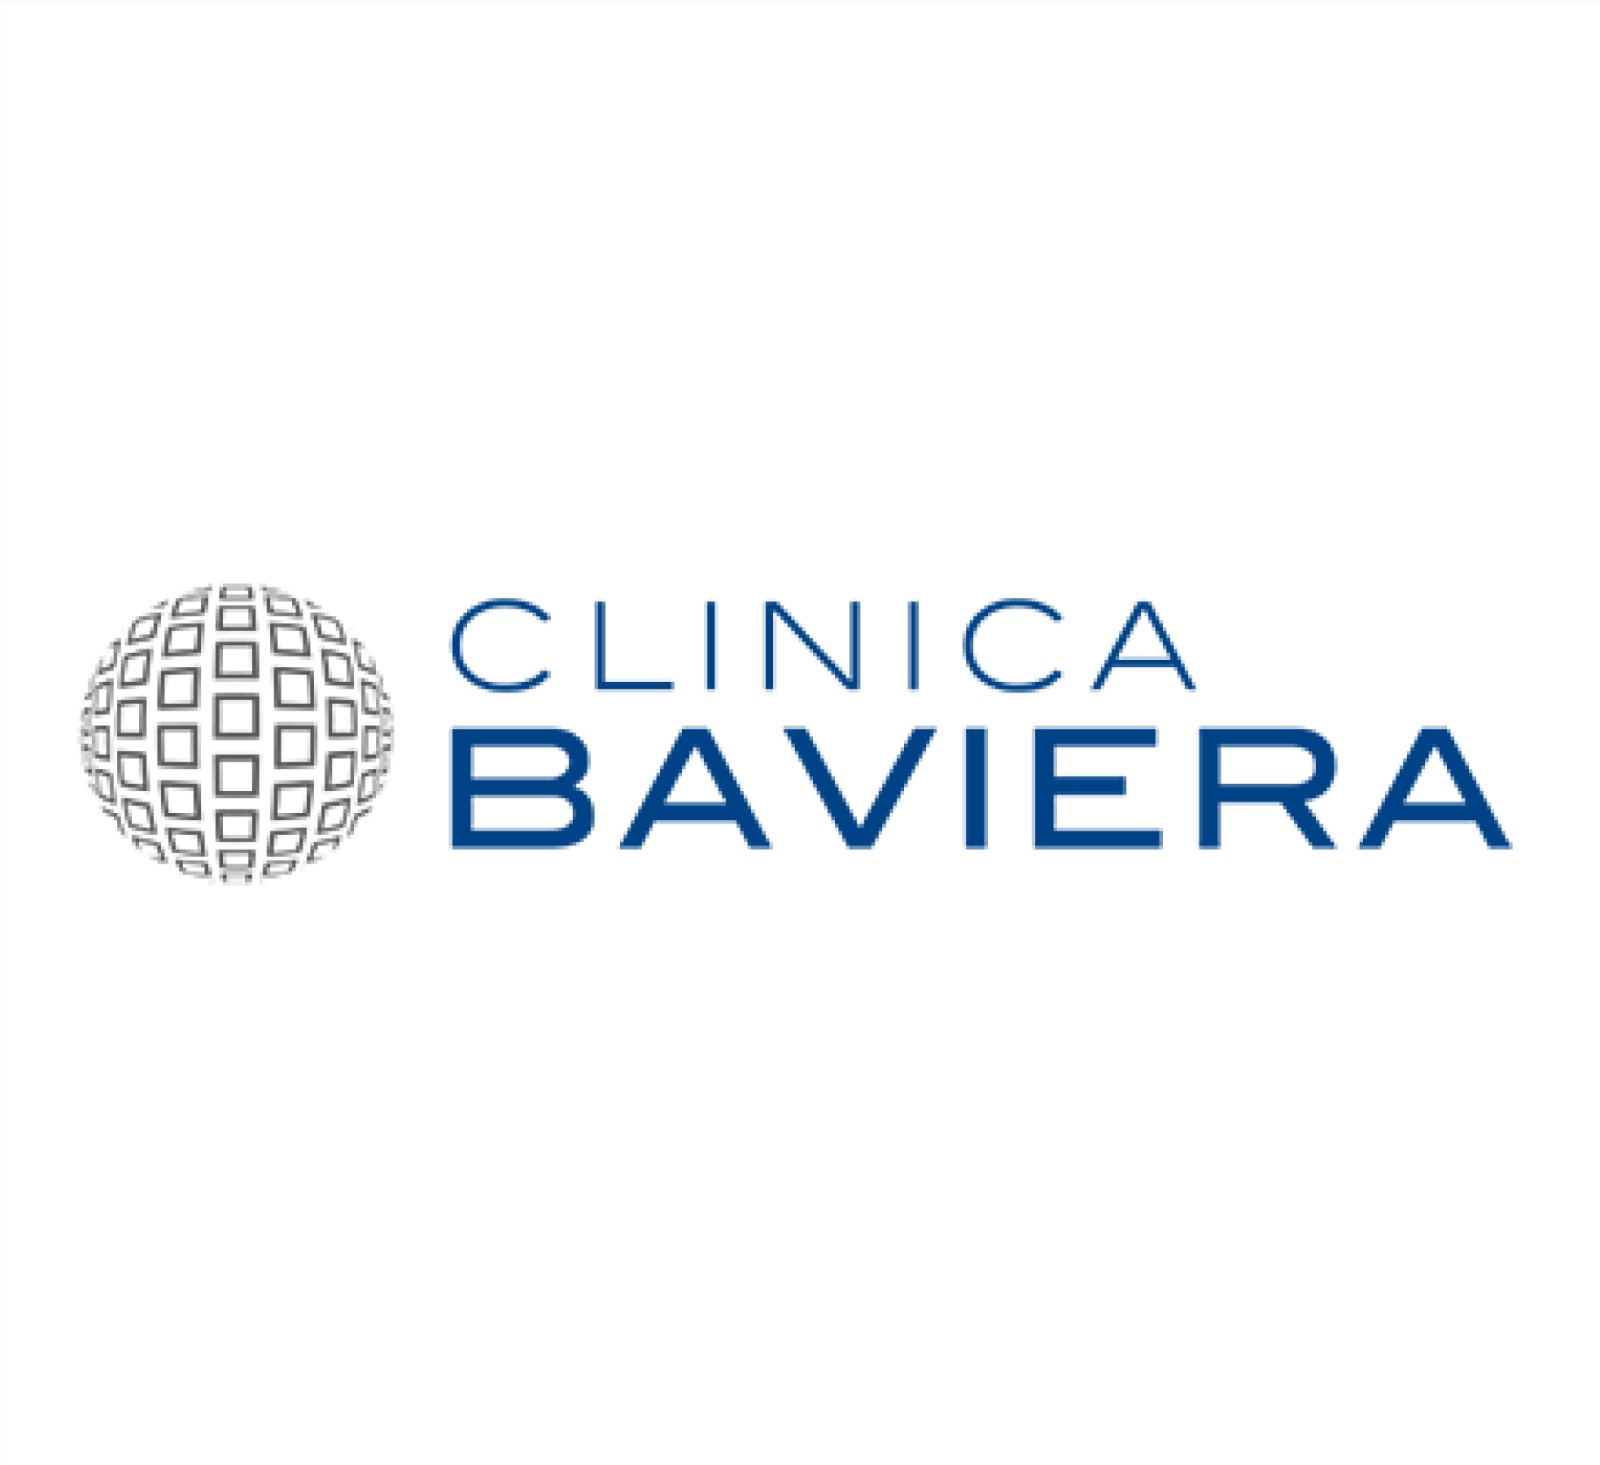 Clinica Baviera